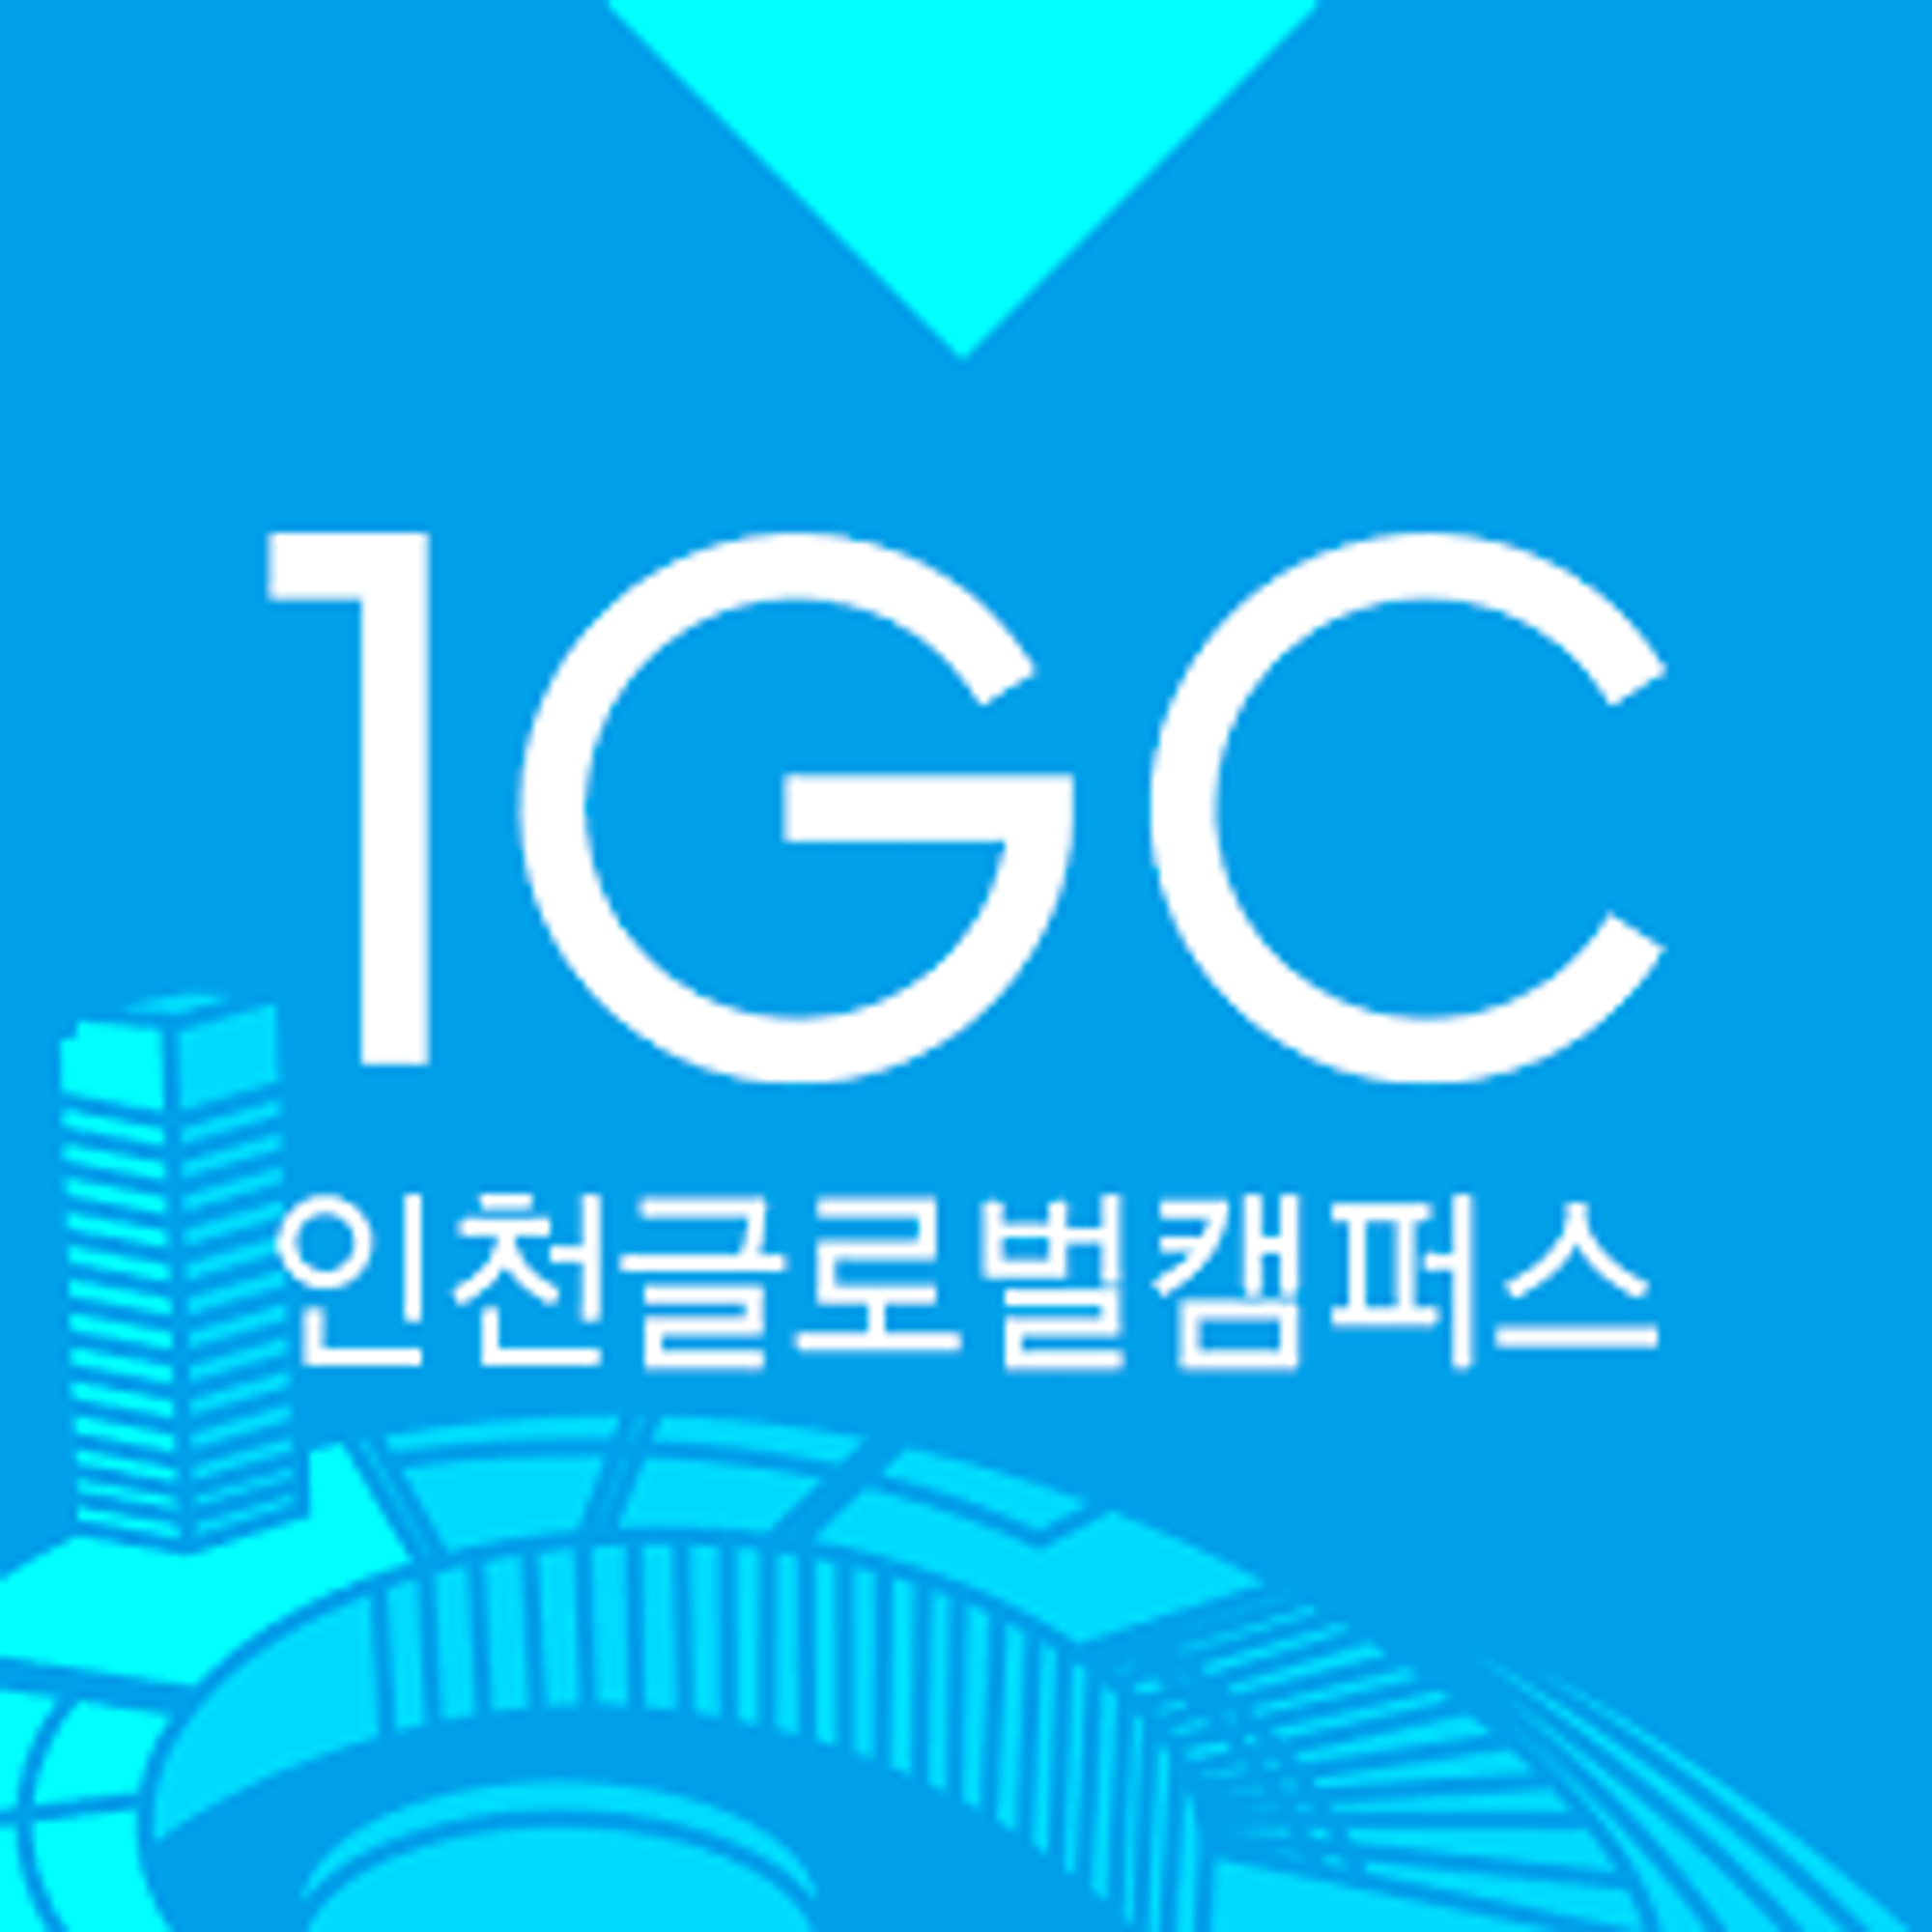 Incheon Global Campus
Incheon, South Korea
Aug 2022 - Present